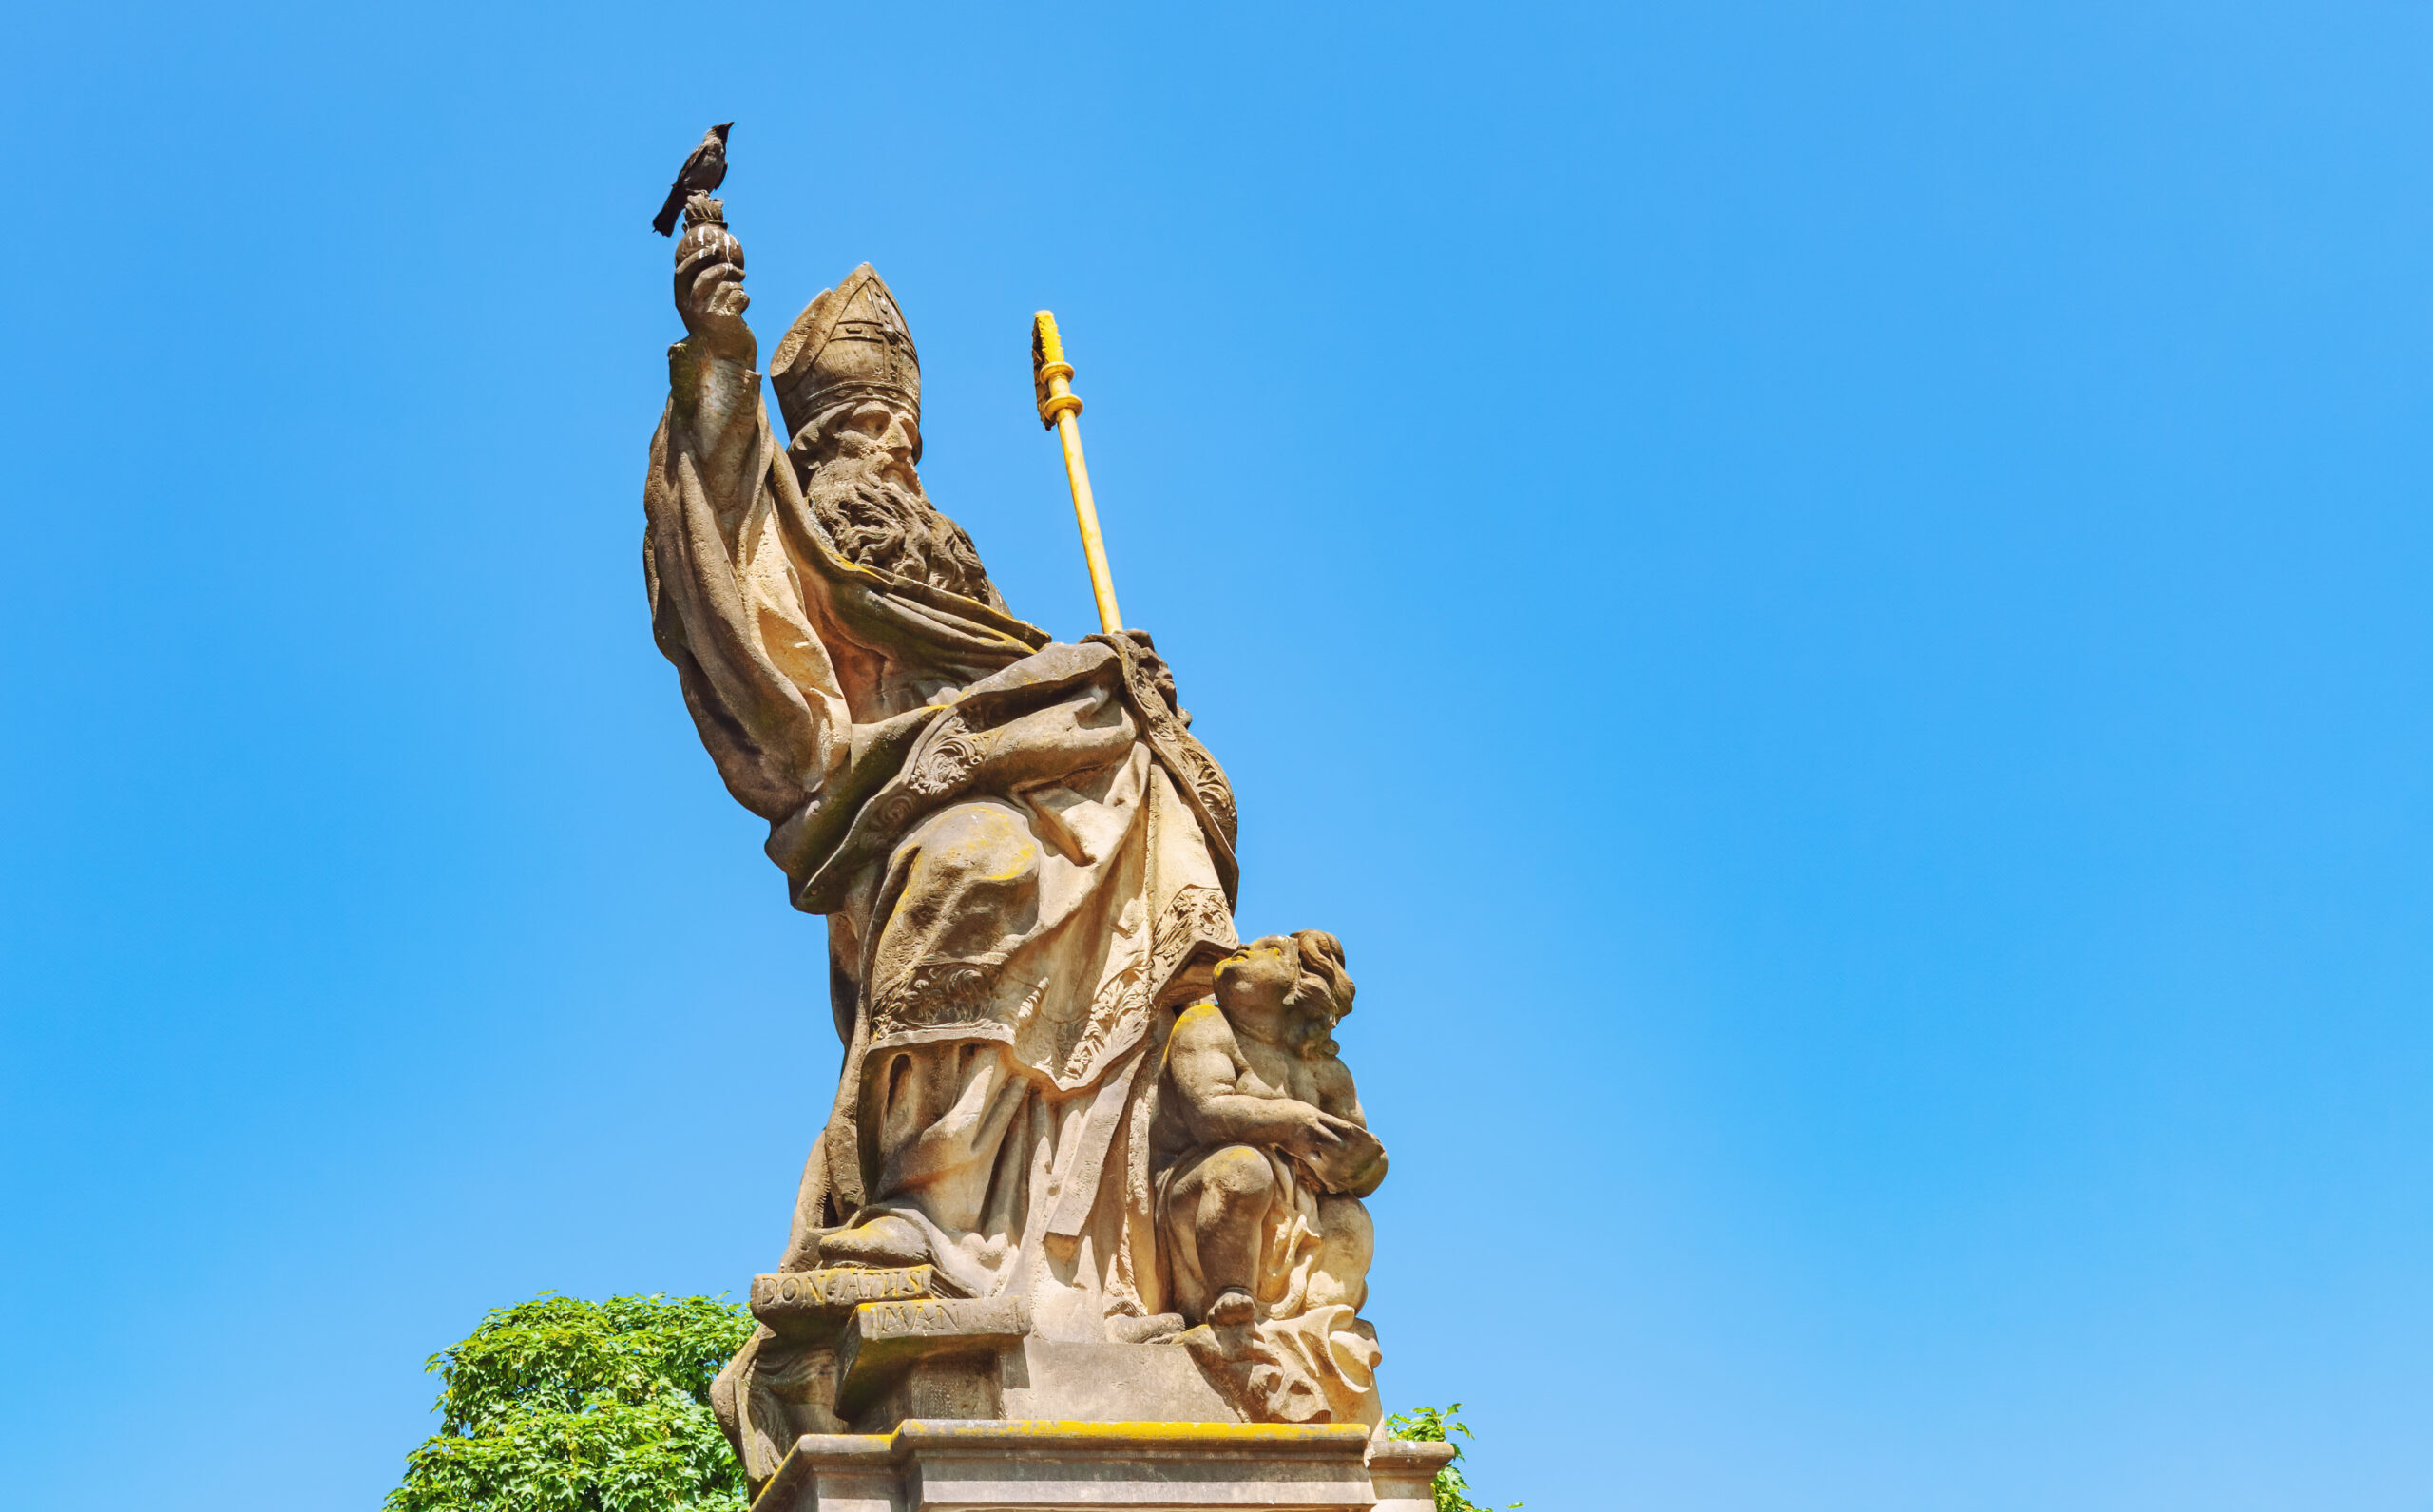 Statue of St. Augustine on Charles Bridge in Prague, Czech Republic (dmf87/iStock via Getty Images)